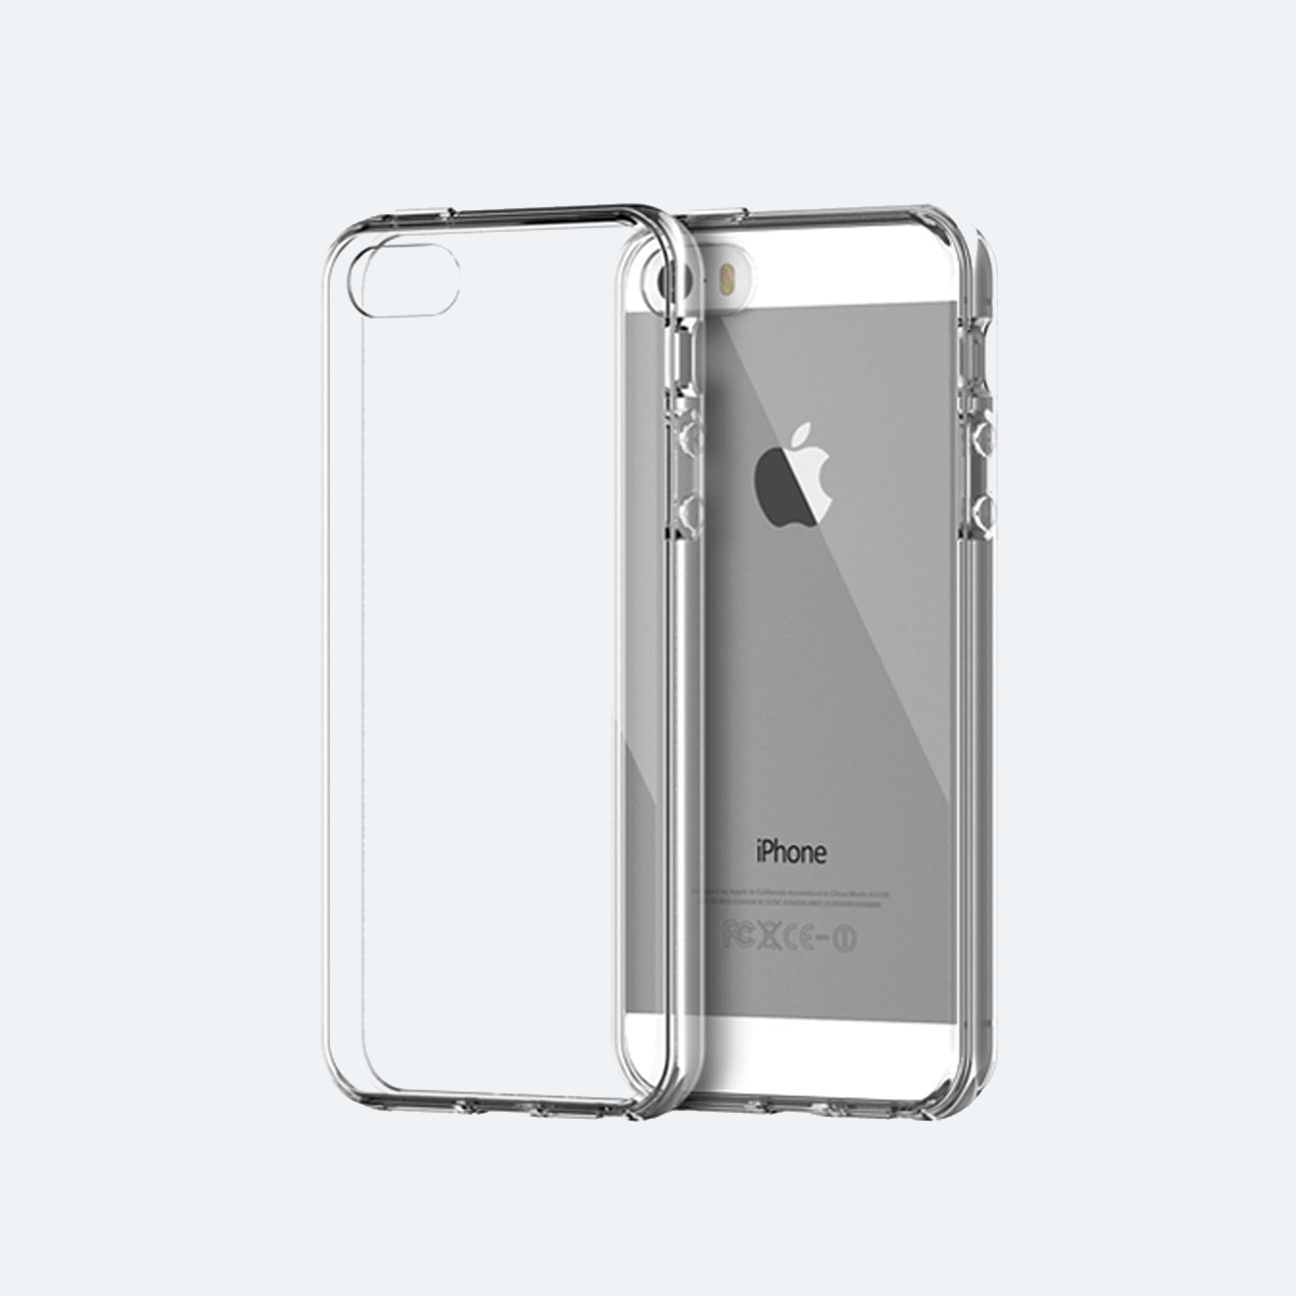 Apple iPhone 5c Transparent Back Cover